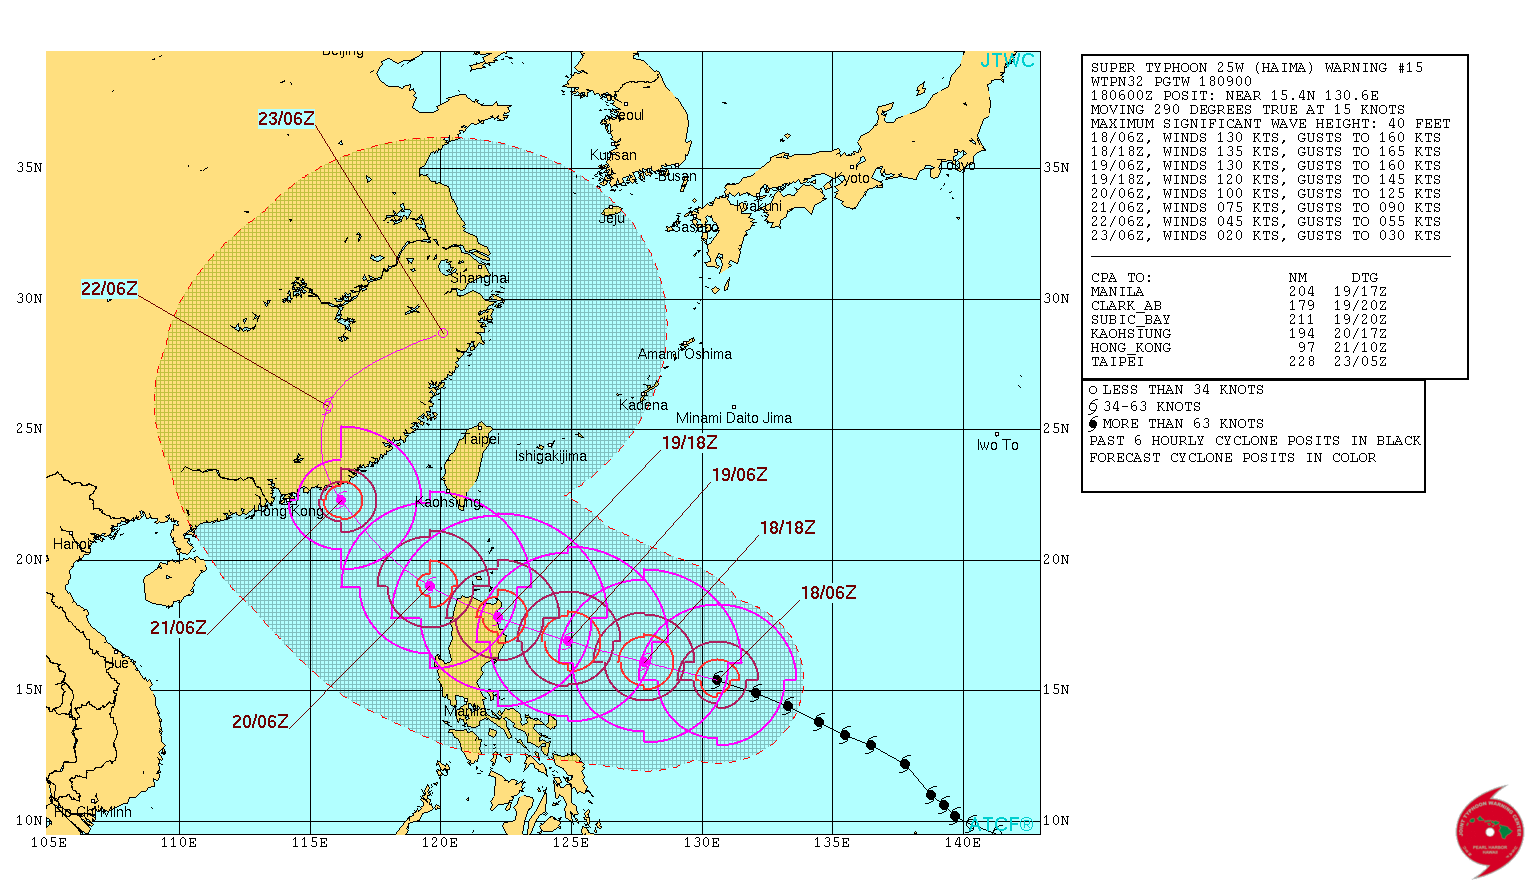 Typhoon Haima forecast track by JTWC at 09:00 UTC on October 18, 2016